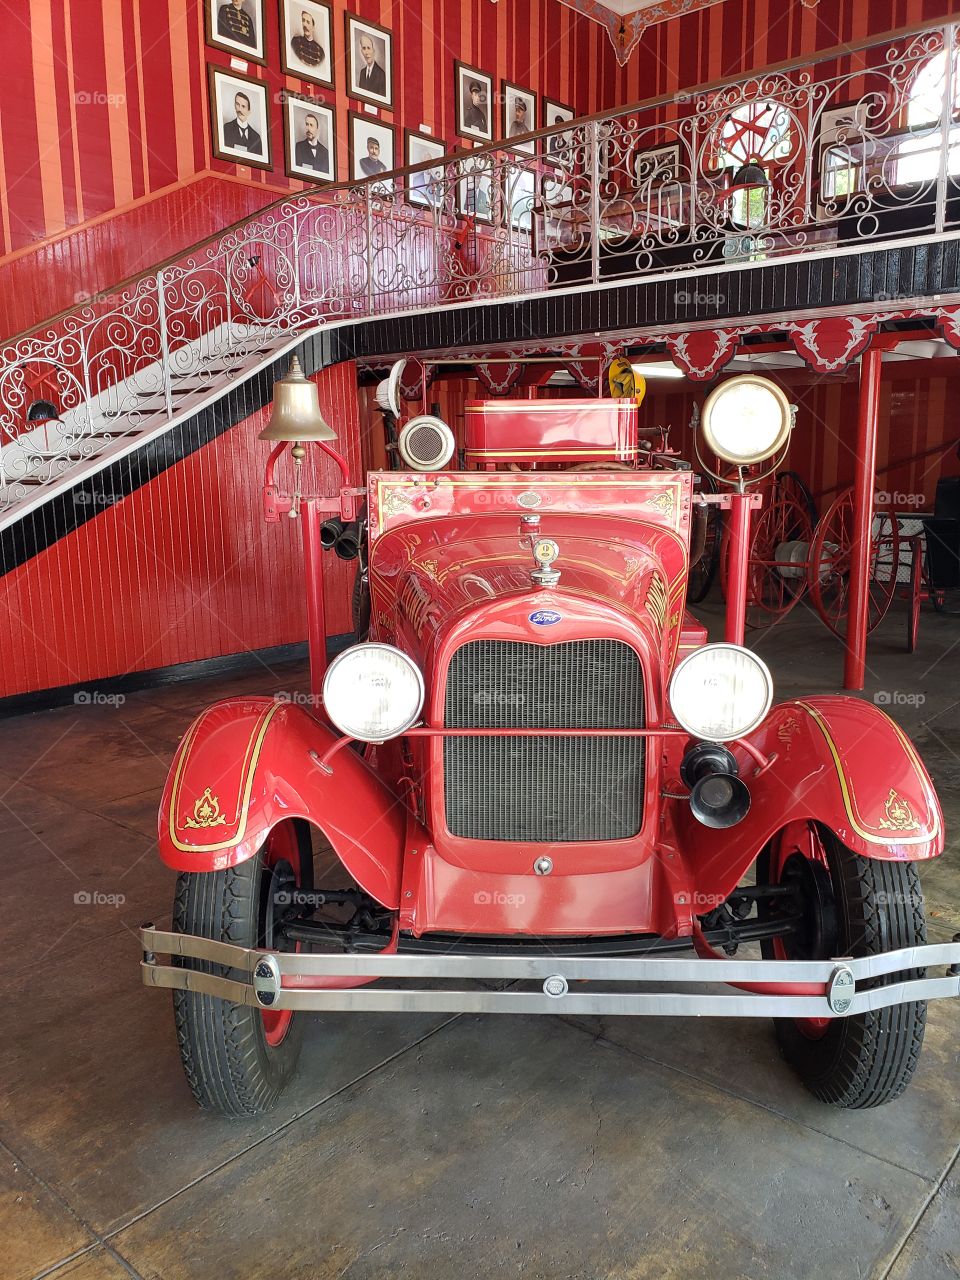 Vintage Fire Truck